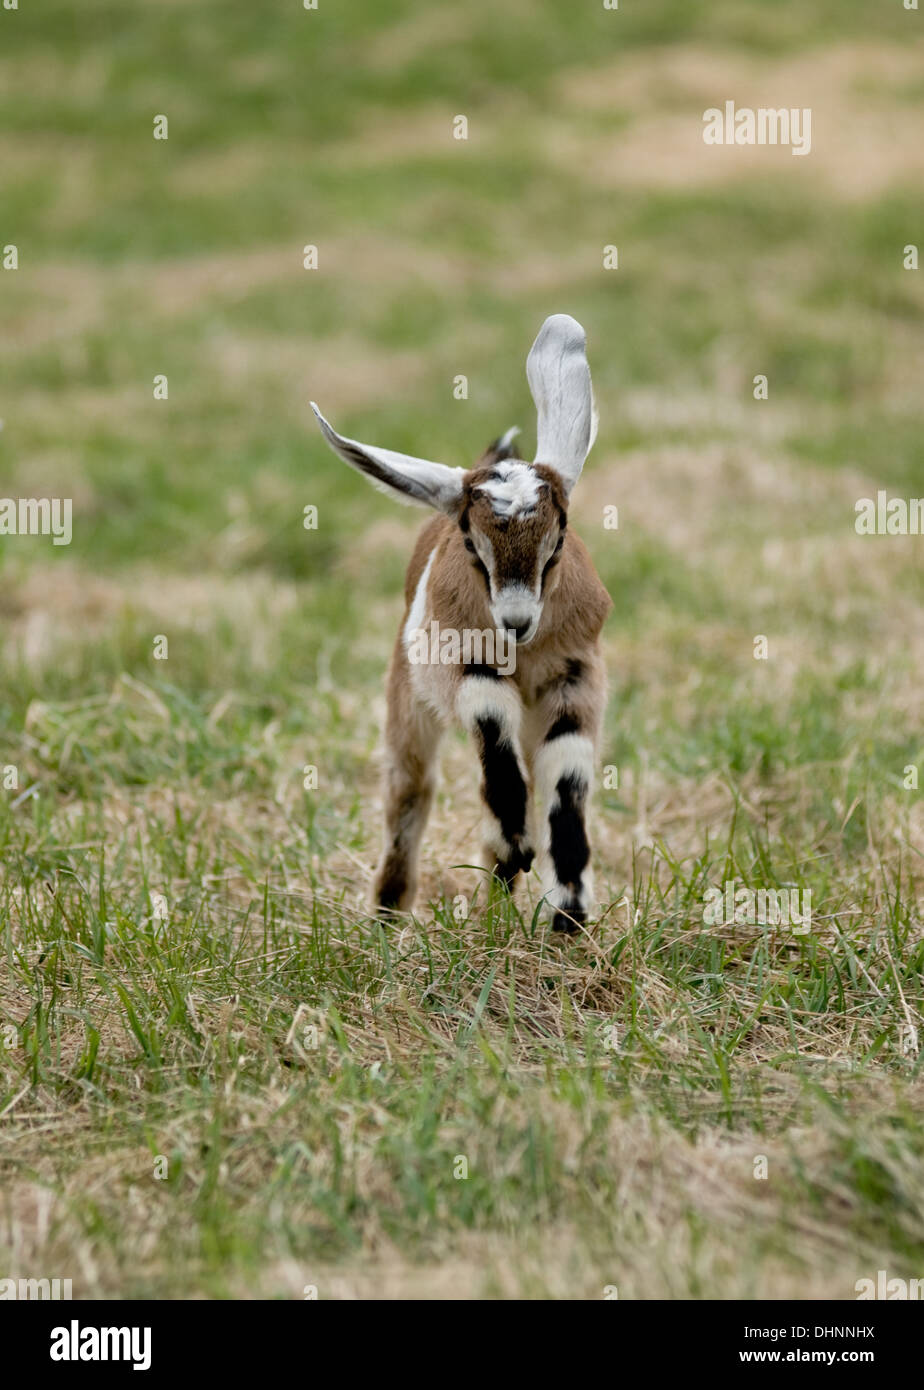 A baby goat with huge ears runs toward the camera. Stock Photo